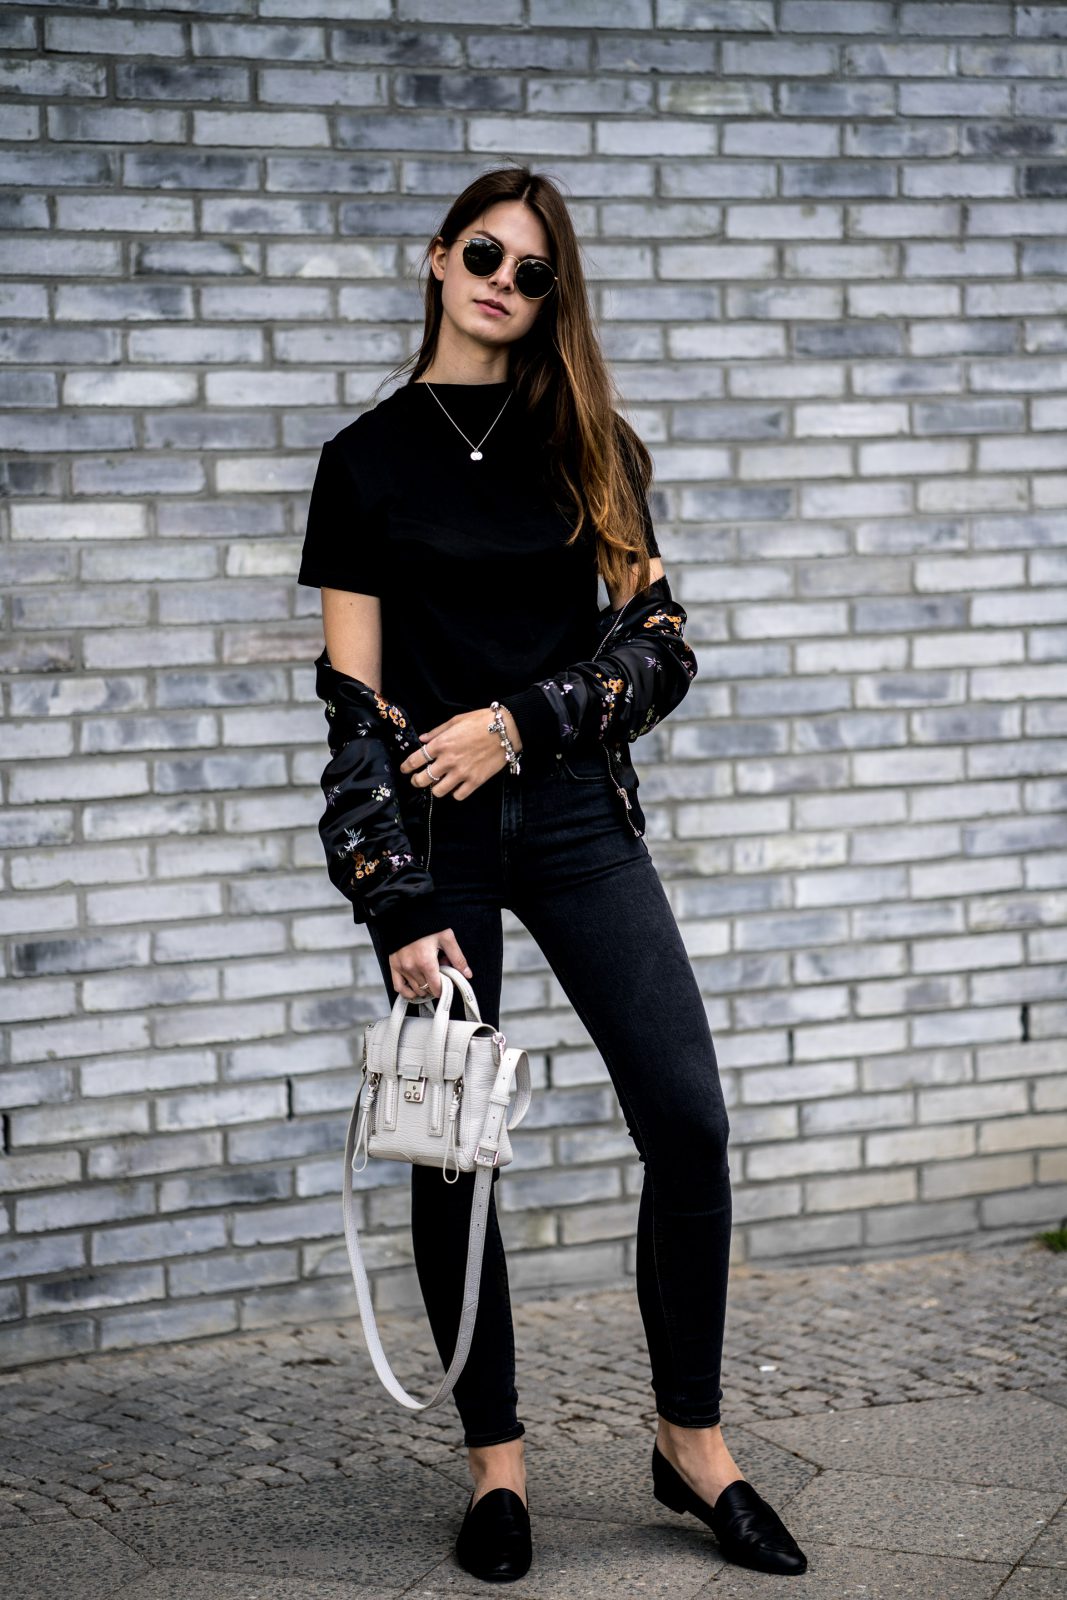 Phillip Lim Mini Pashli || All black outfit and a light grey bag